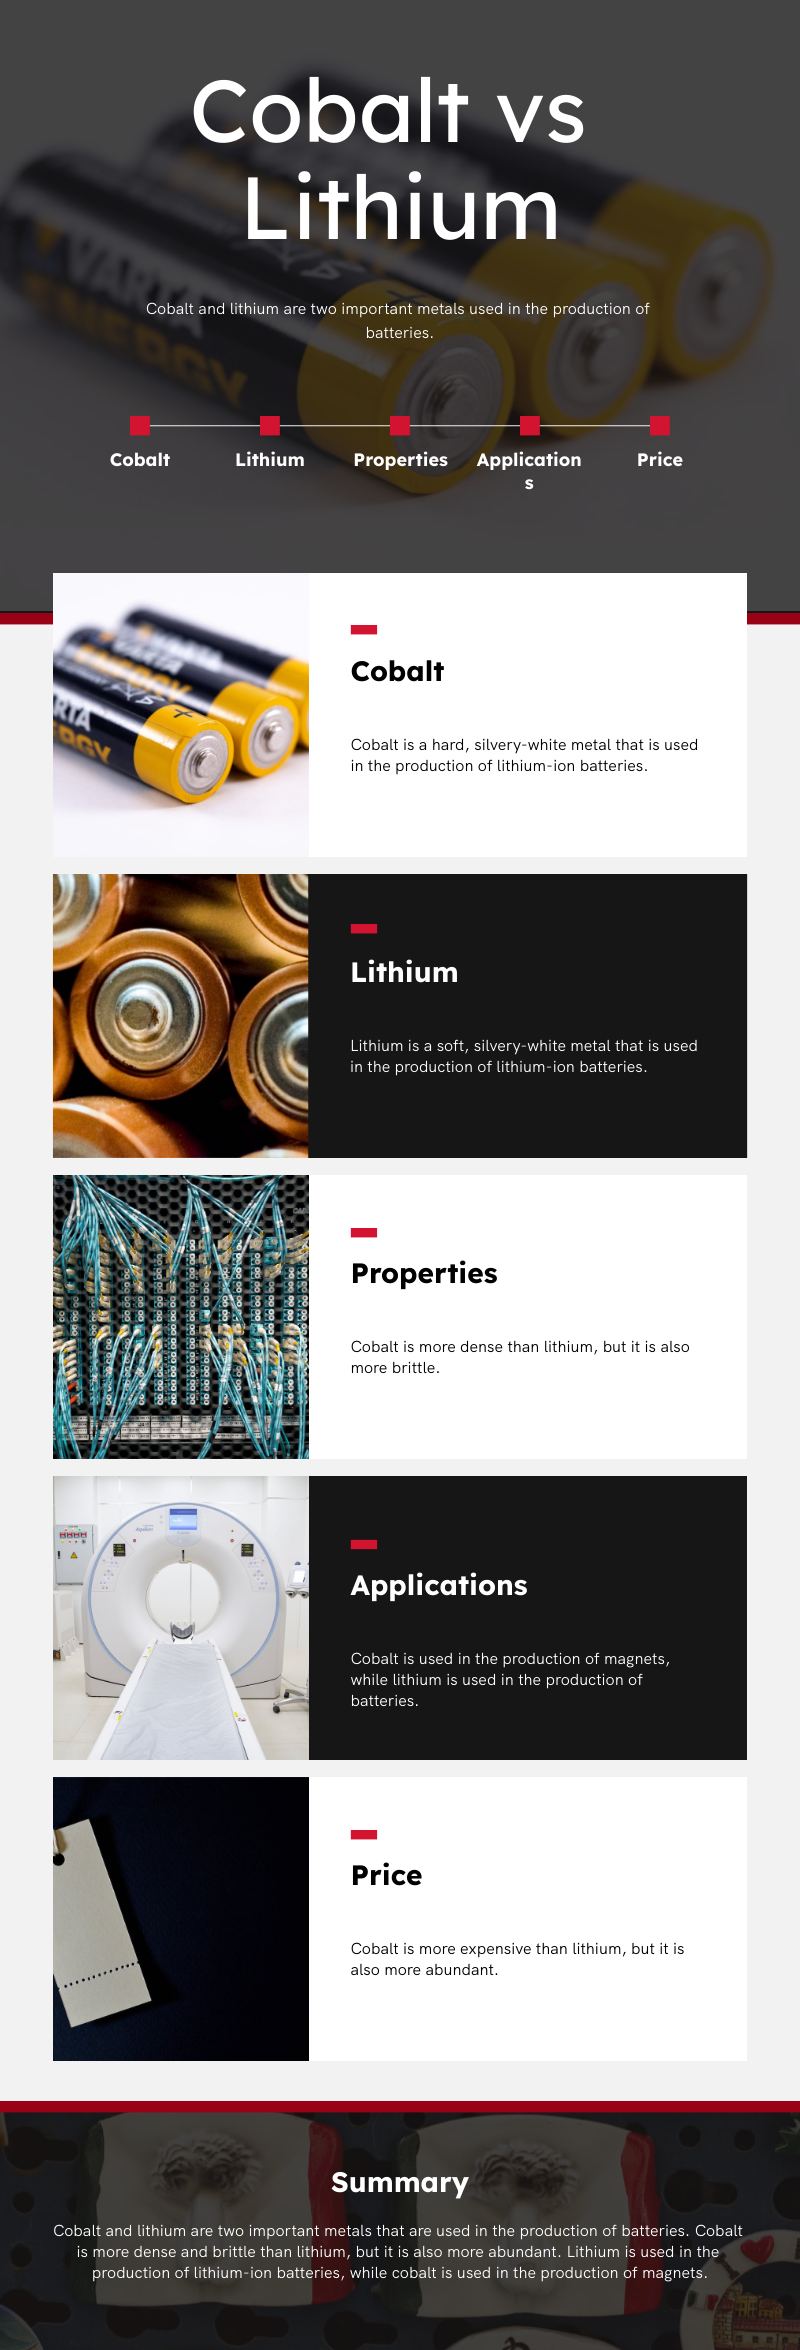 infographic for cobalt vs lithium 